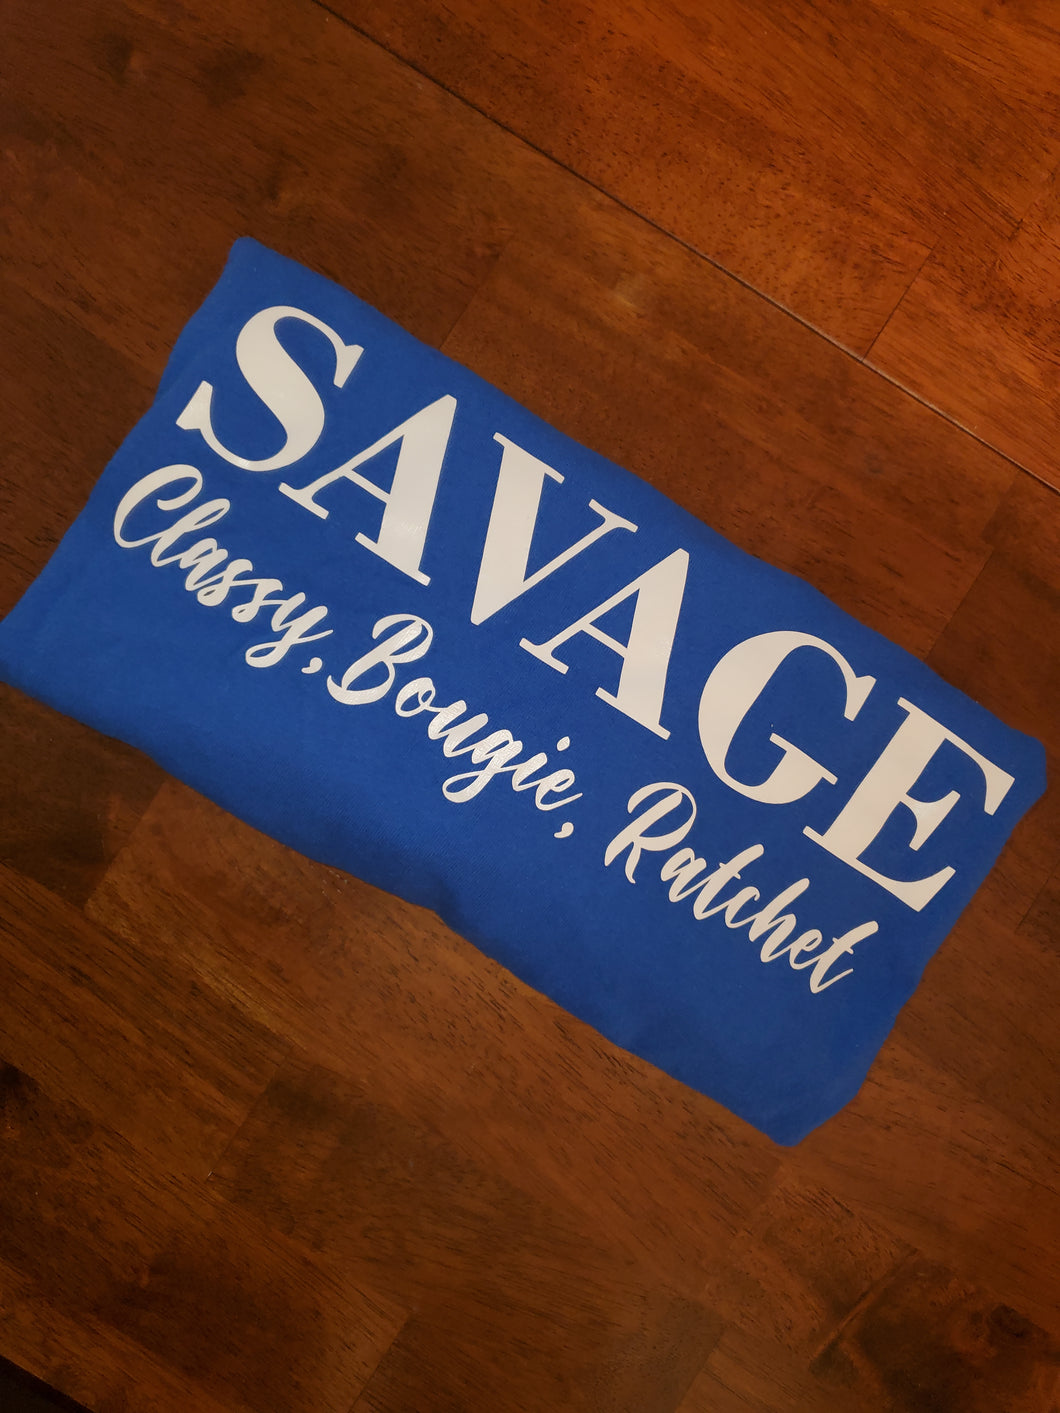 Savage: Classy, Bougie, Ratchet